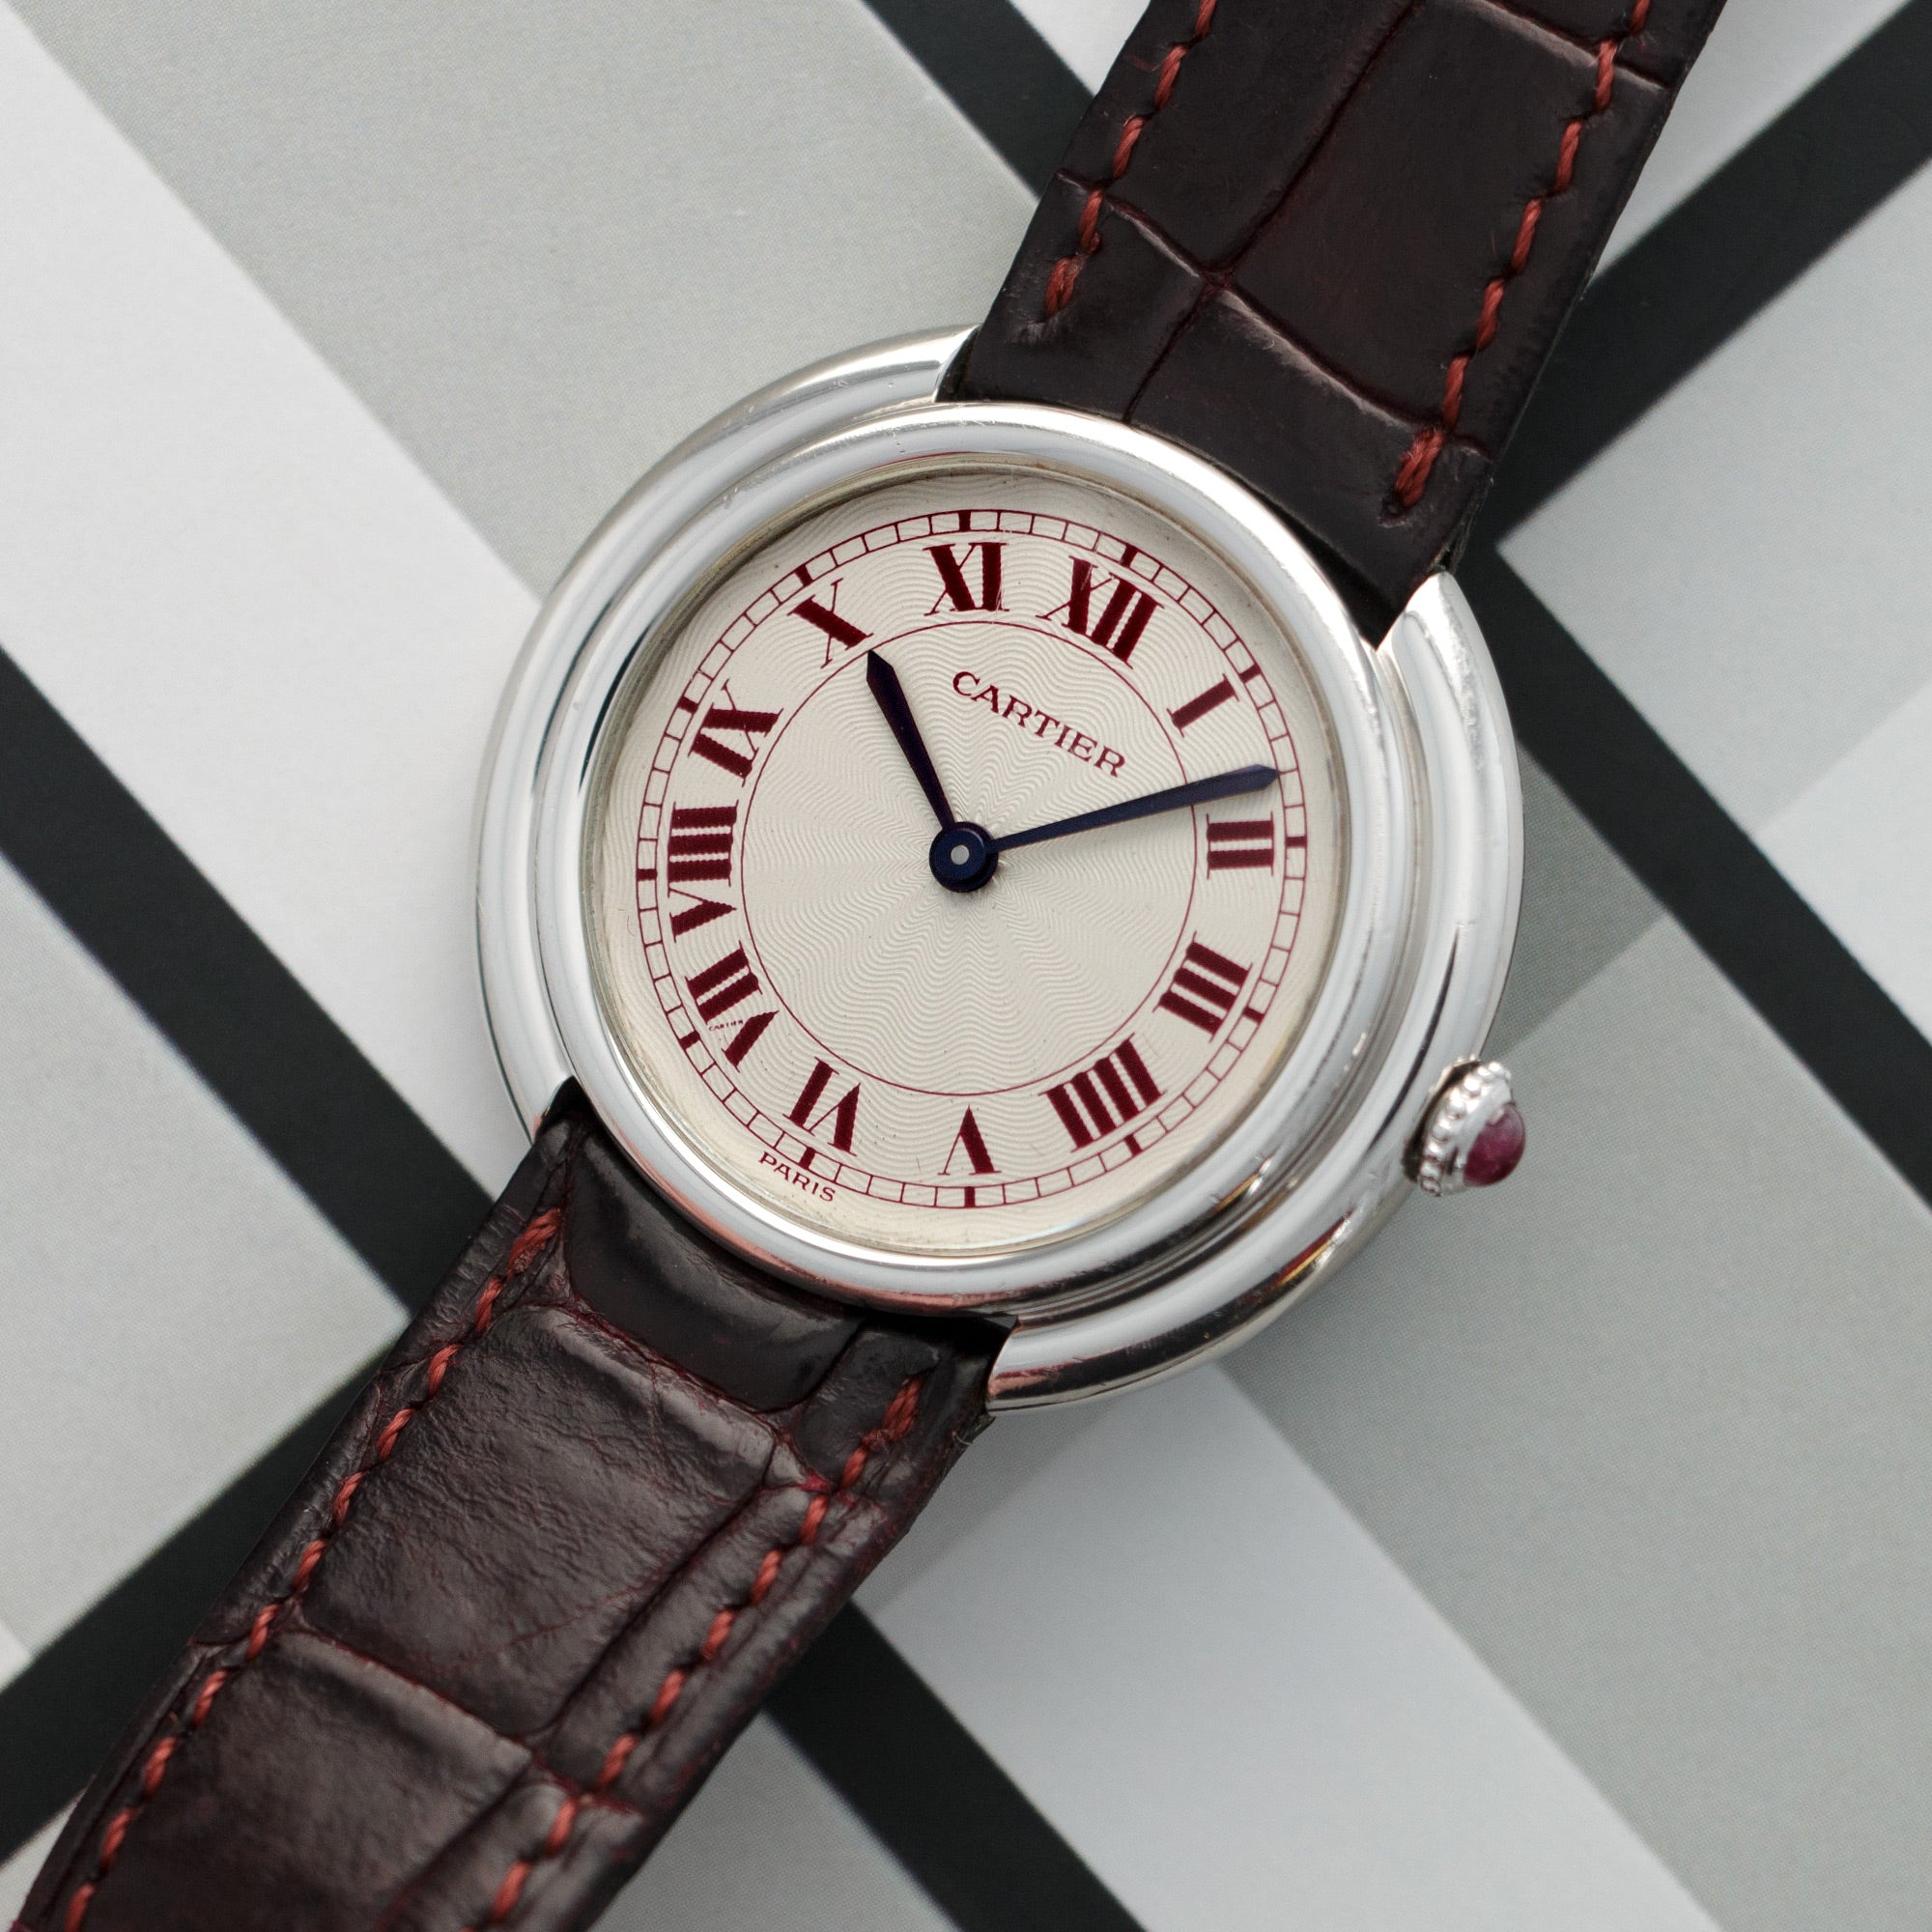 Cartier - Cartier Platinum Vendome Watch, 1974 - The Keystone Watches